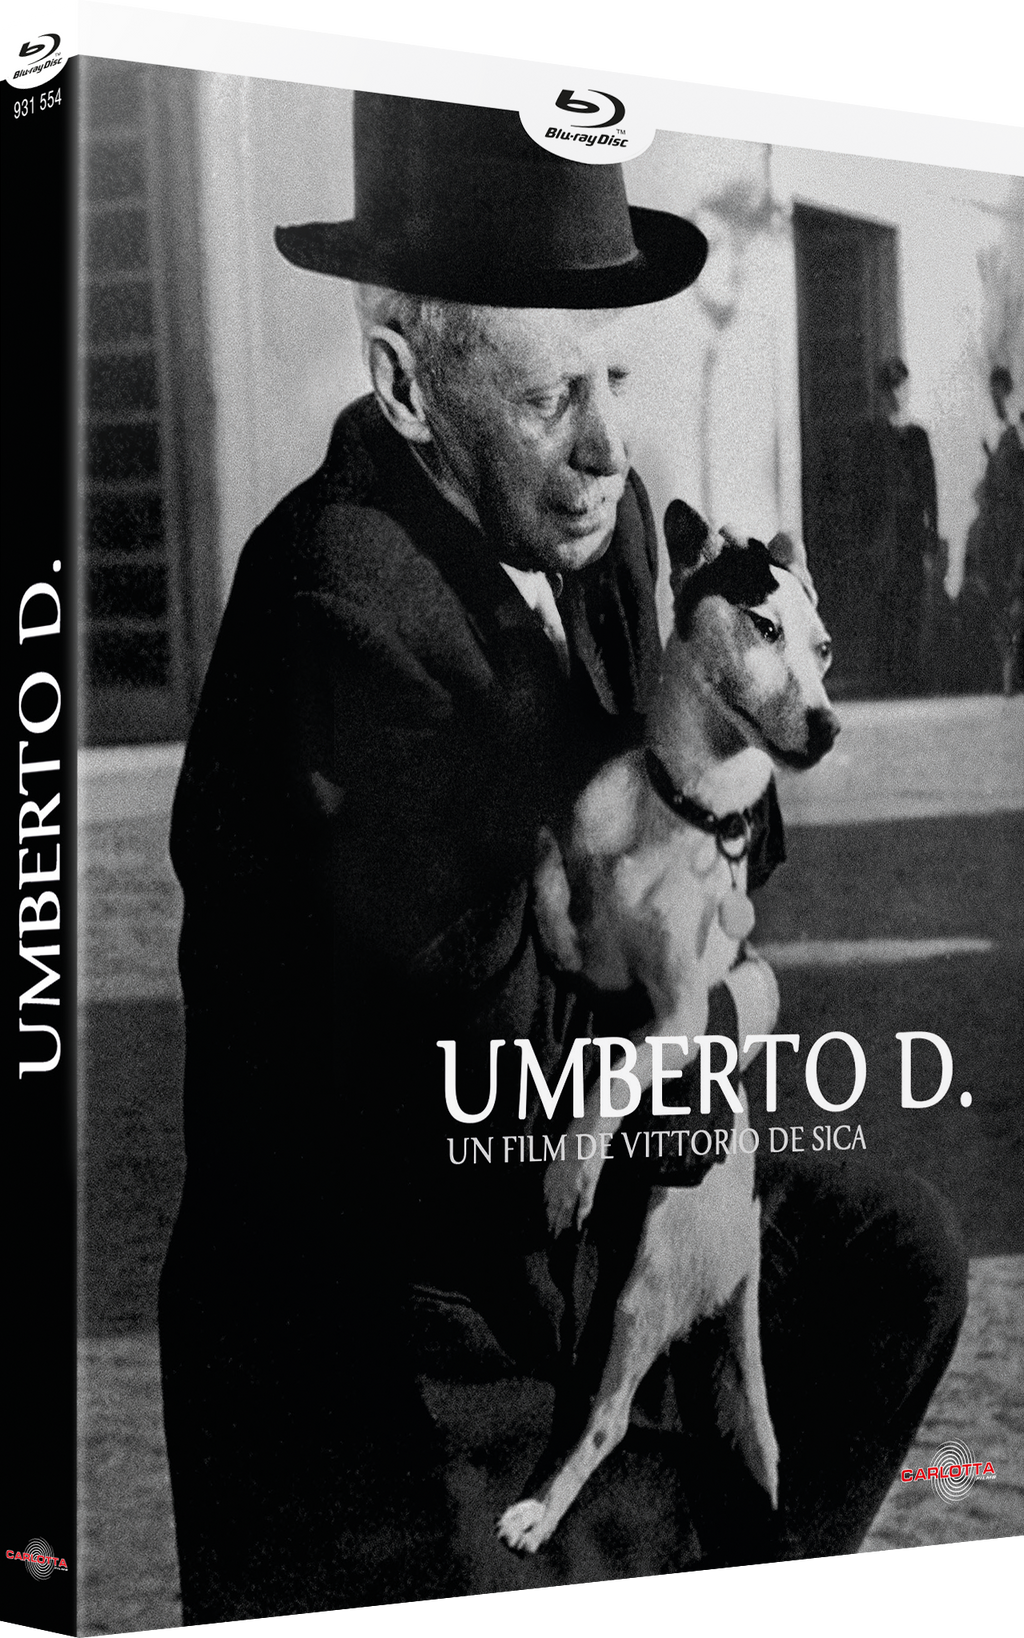 Umberto D. de Vittorio De Sica